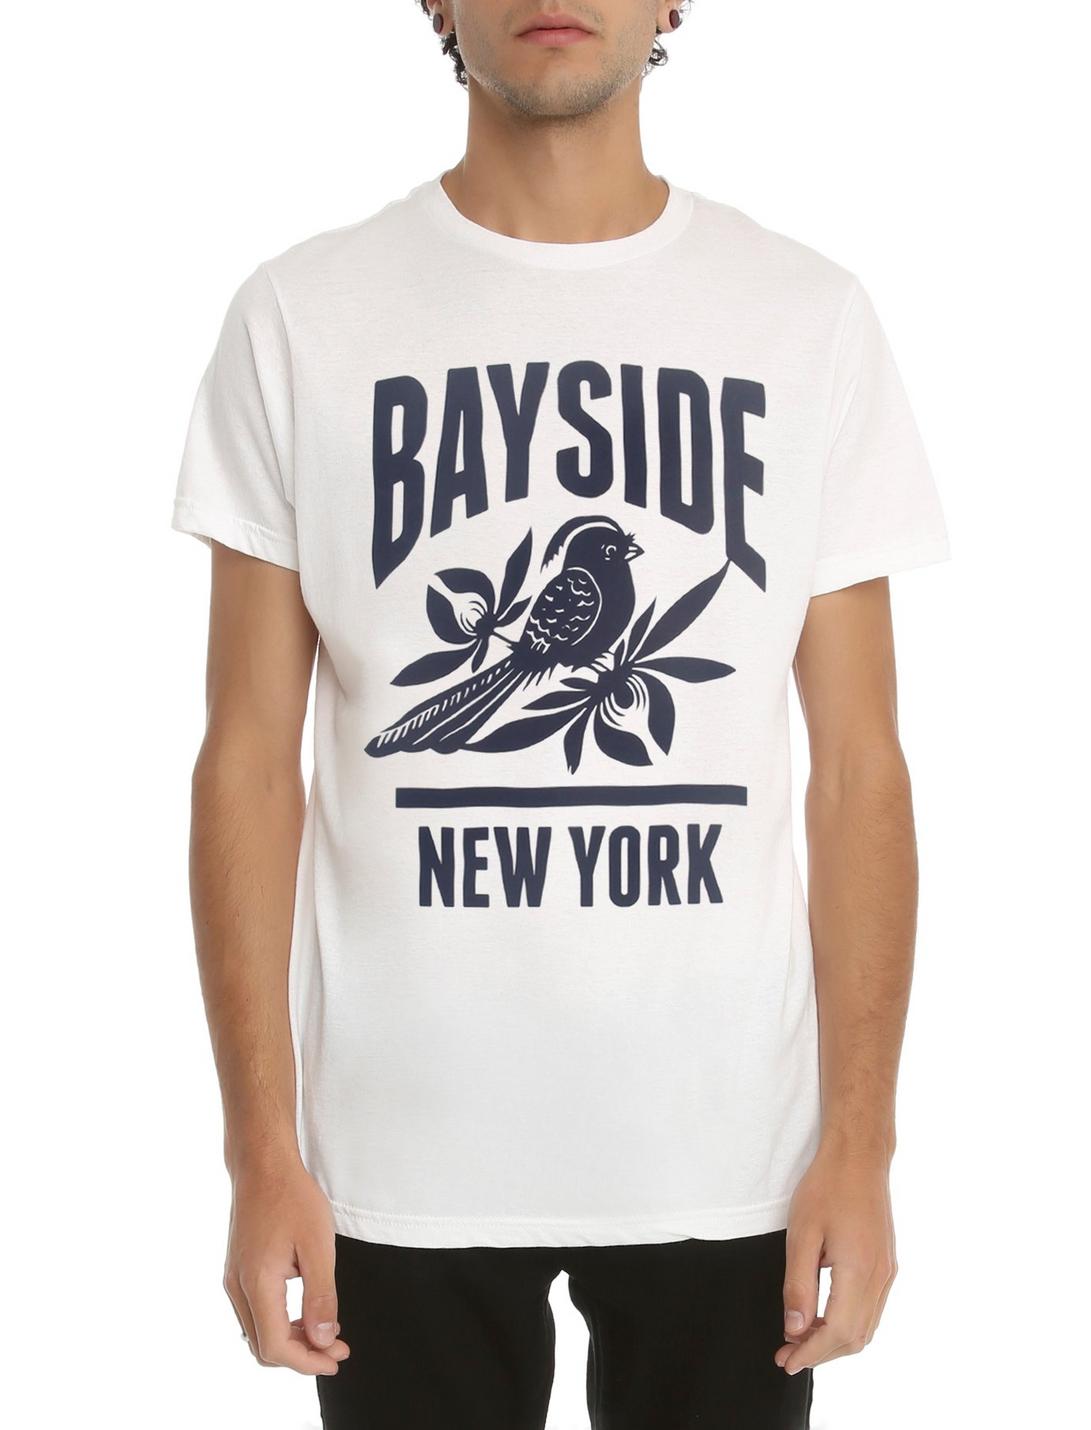 Bayside New York T-Shirt, WHITE, hi-res